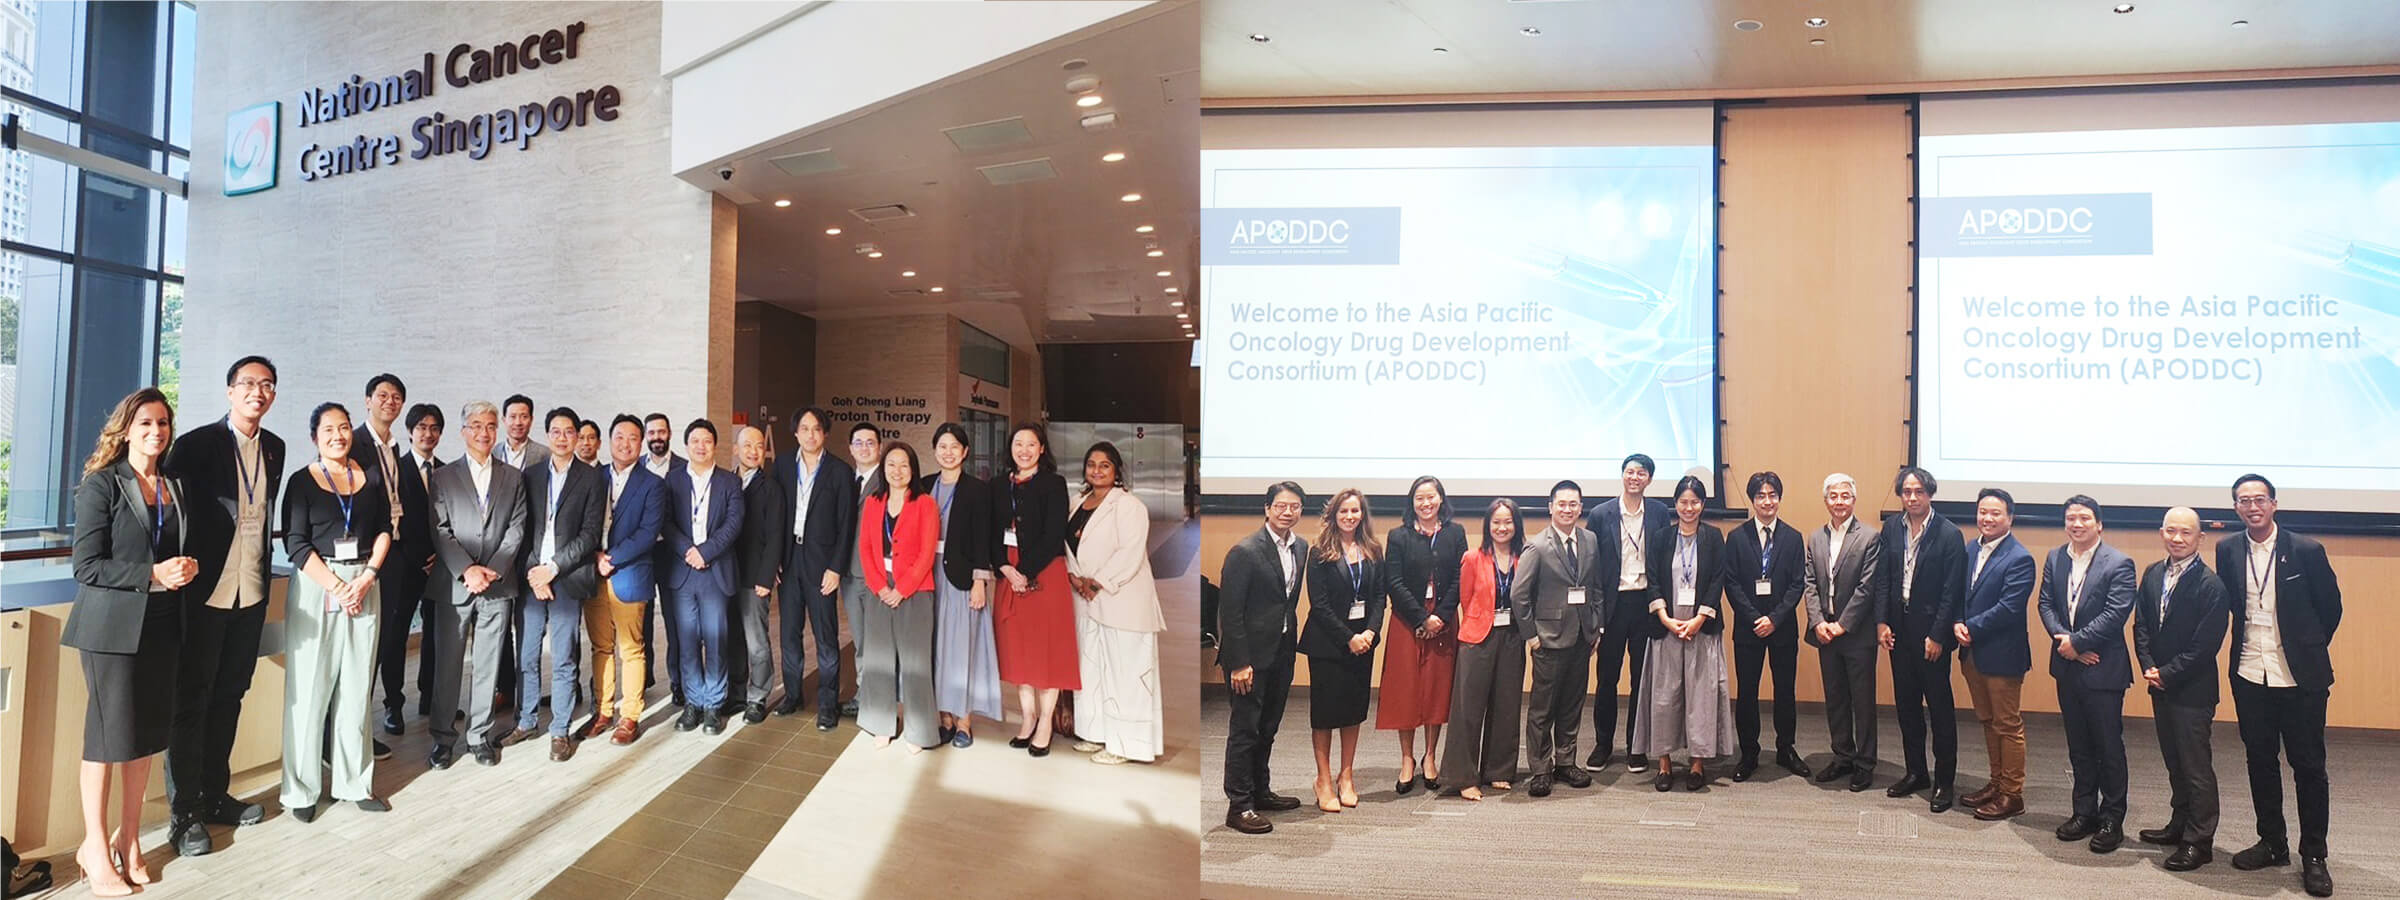 Asia Pacific Oncology Drug Development Consortium (APODDC)